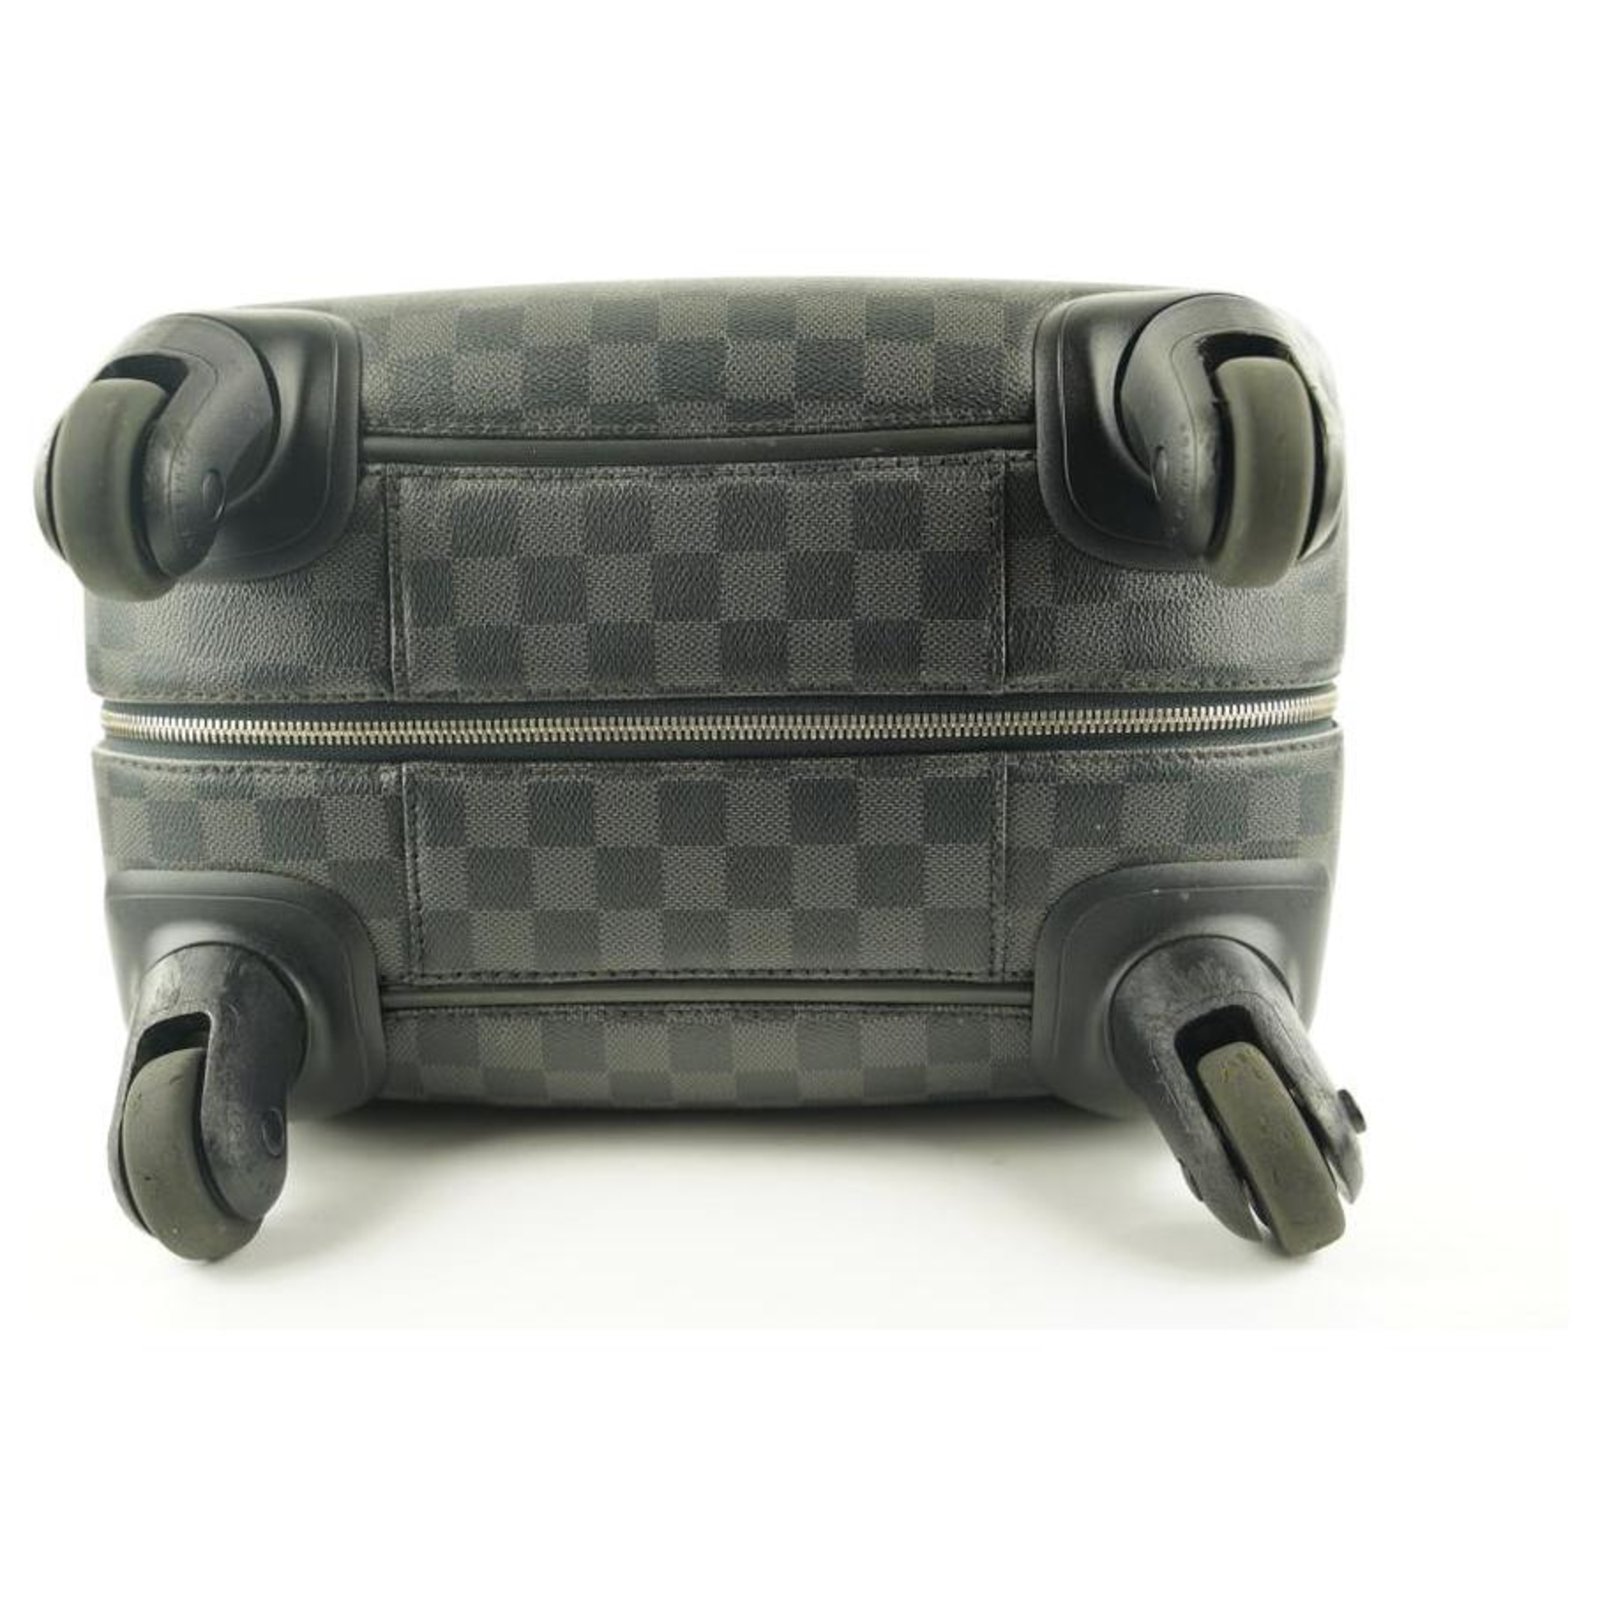 Louis Vuitton Zephyr 55 Damier Graphite Suitcase Travel Spinner 4 wheeled  luggage 